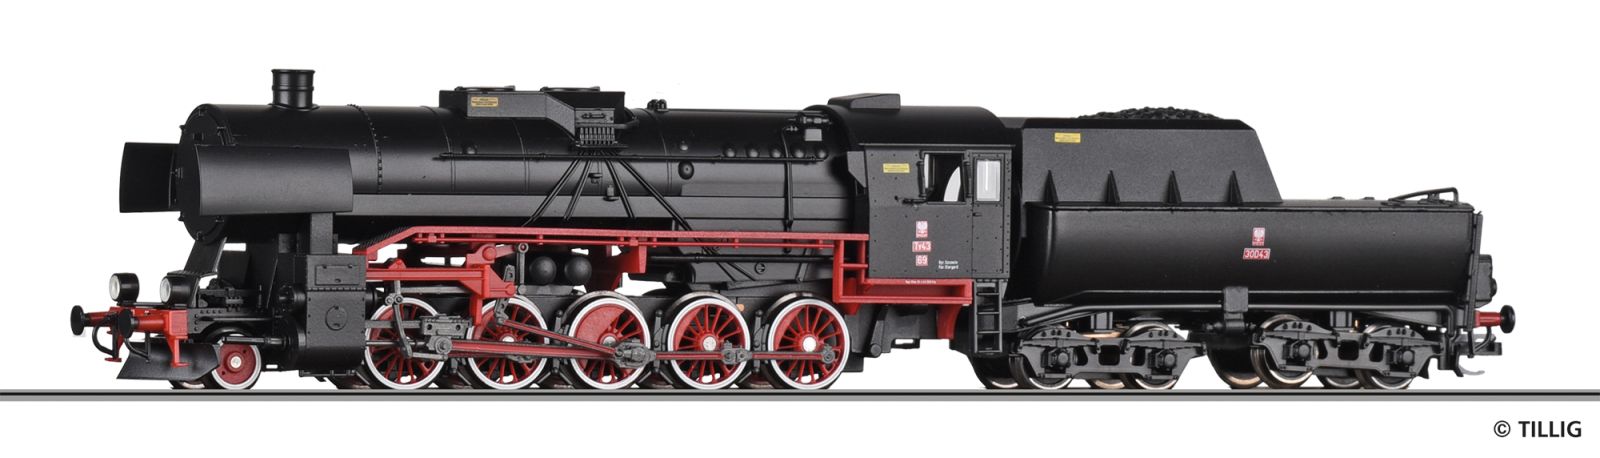 Steam locomotive PKP